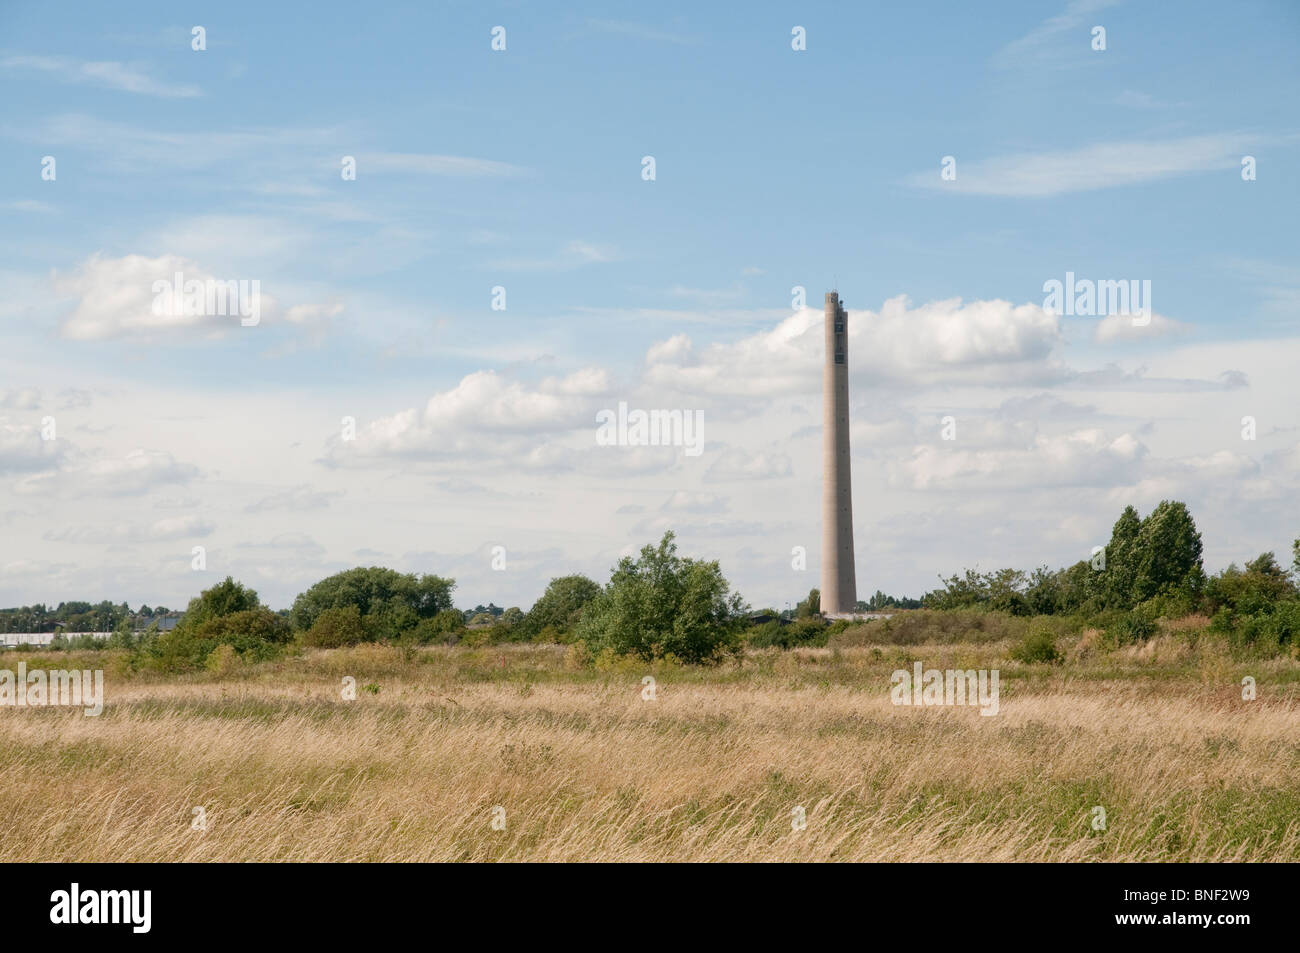 The iconic Lift Testing Tower in Northampton, Northamptonshire. Stock Photo